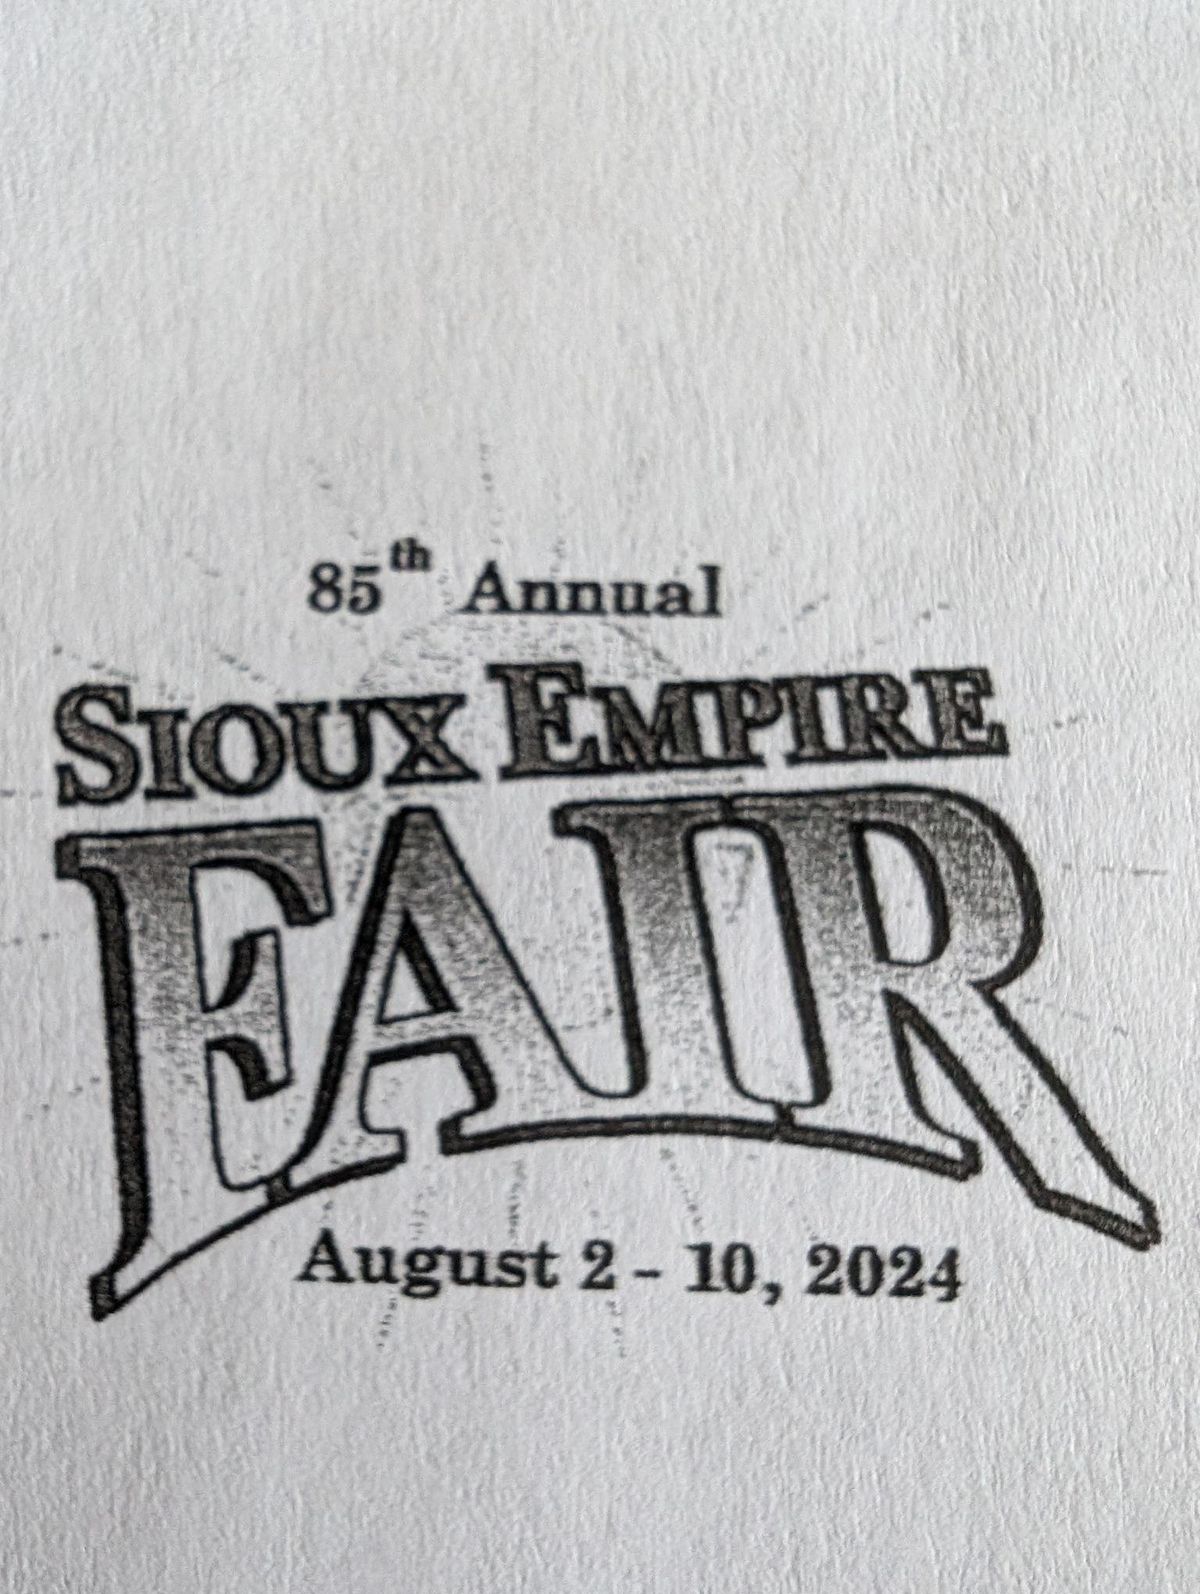 COS Booth - Sioux Empire Fair